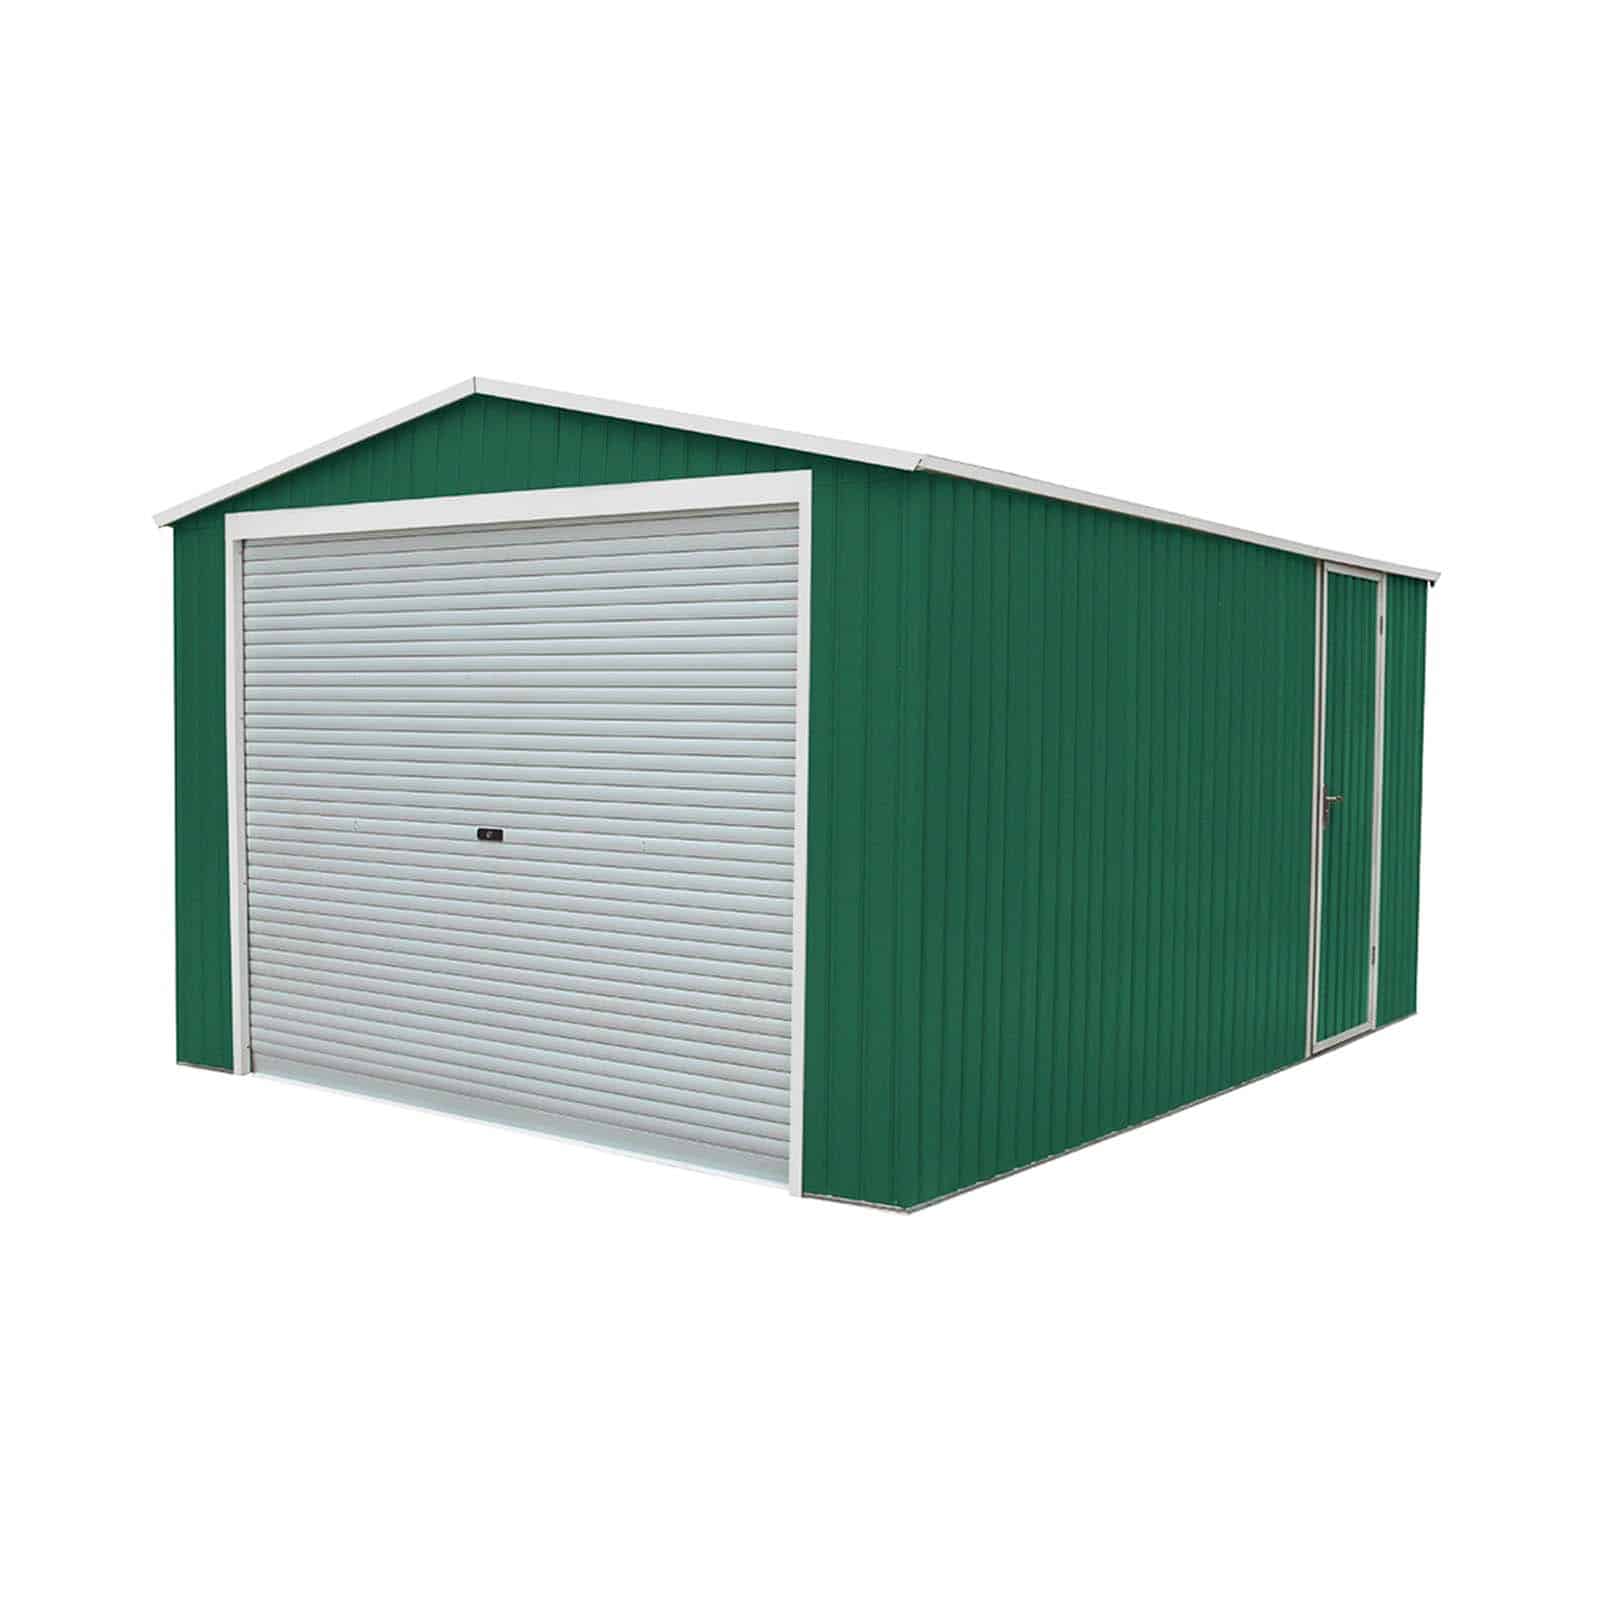 Garaje metálico 576x338x243 cm (19,5 m²) Essex verde